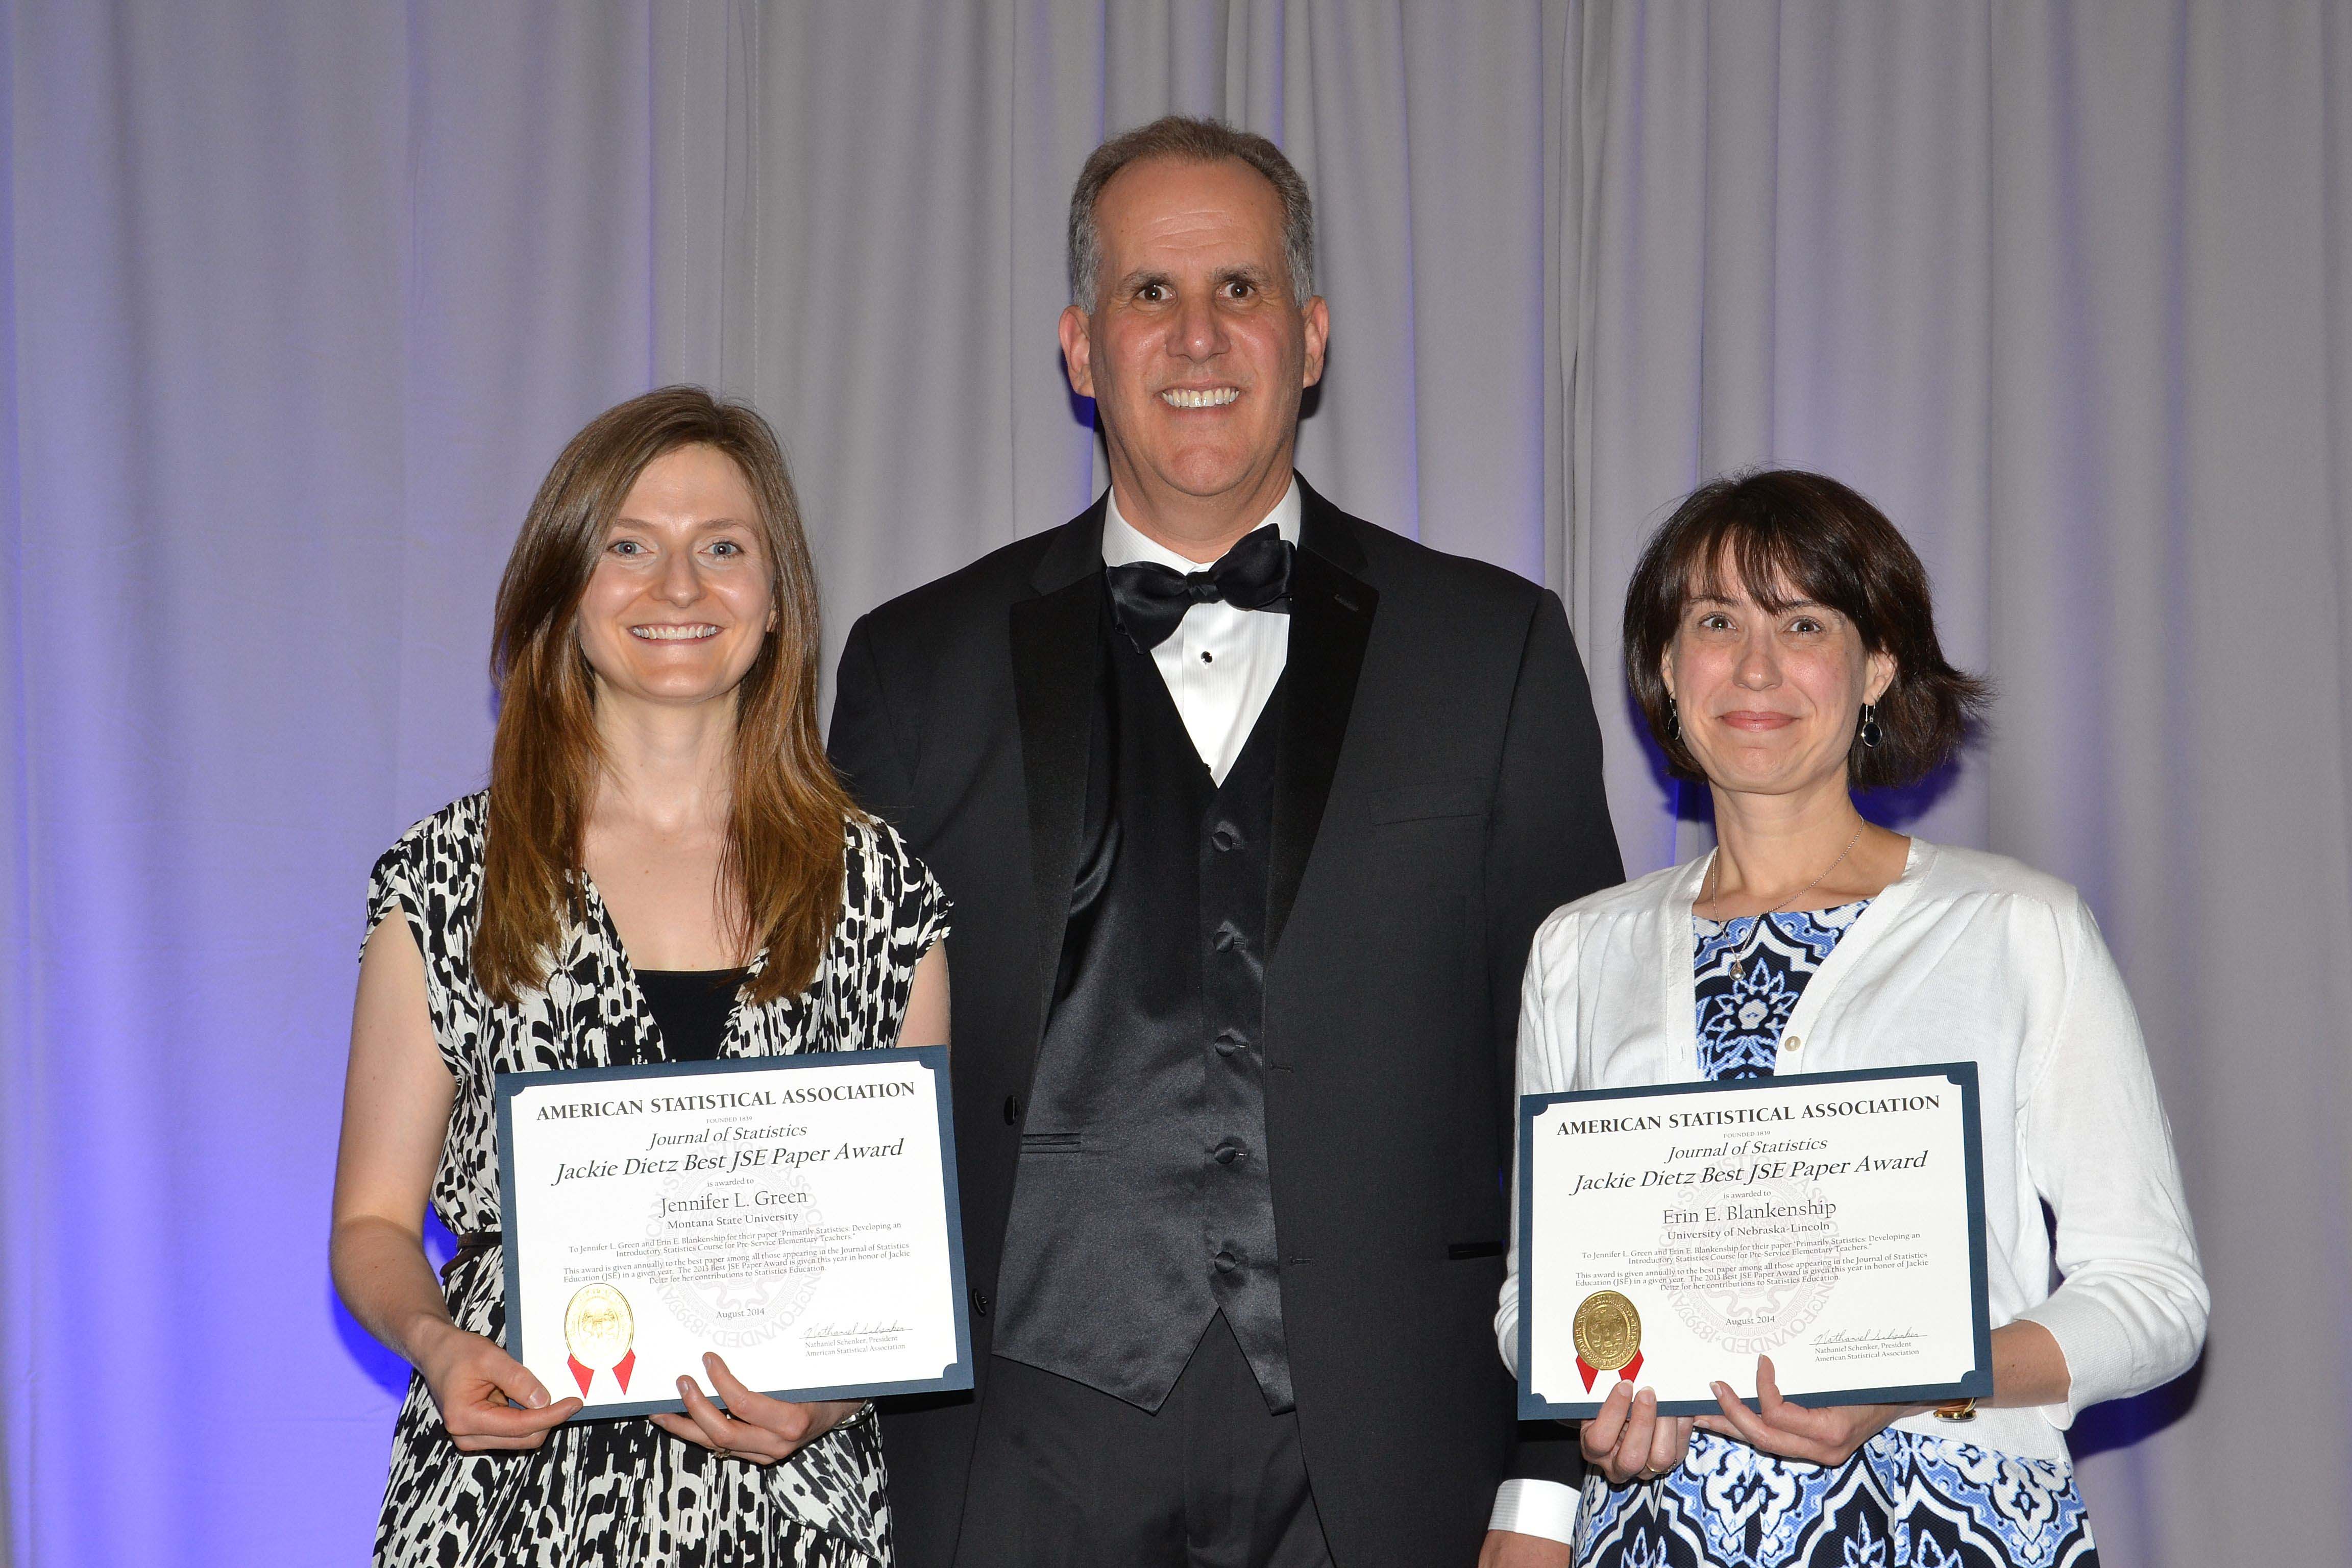 Jennifer Green of Montana State University and Erin E. Blankenship of the University of Nebraska-Lincoln win the Jackie Dietz Best JSE Paper Award